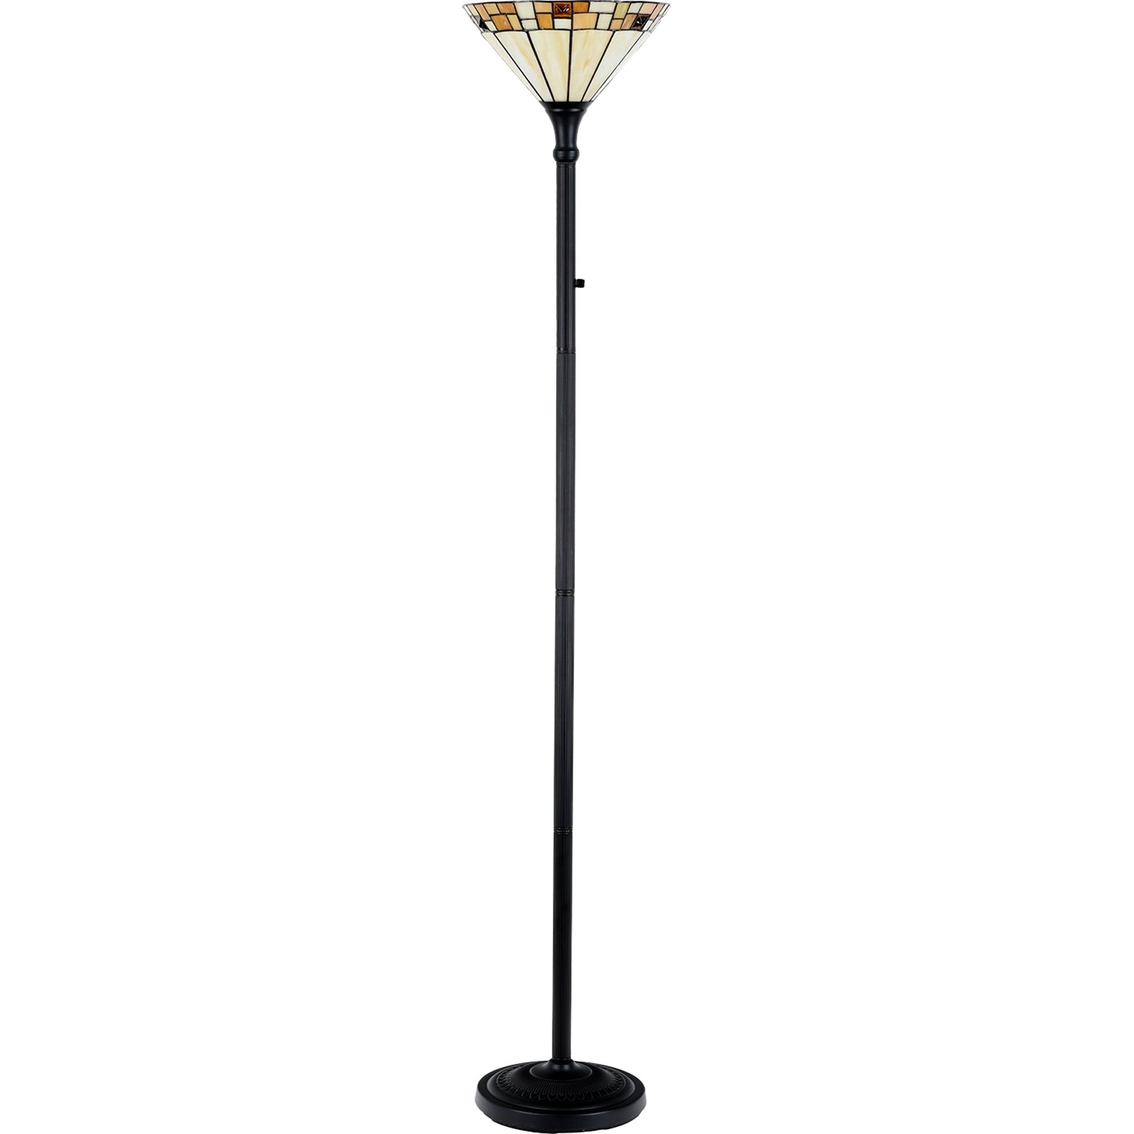 Dale Tiffany Sundance Led Torchiere Floor Lamp Lamps regarding size 1134 X 1134